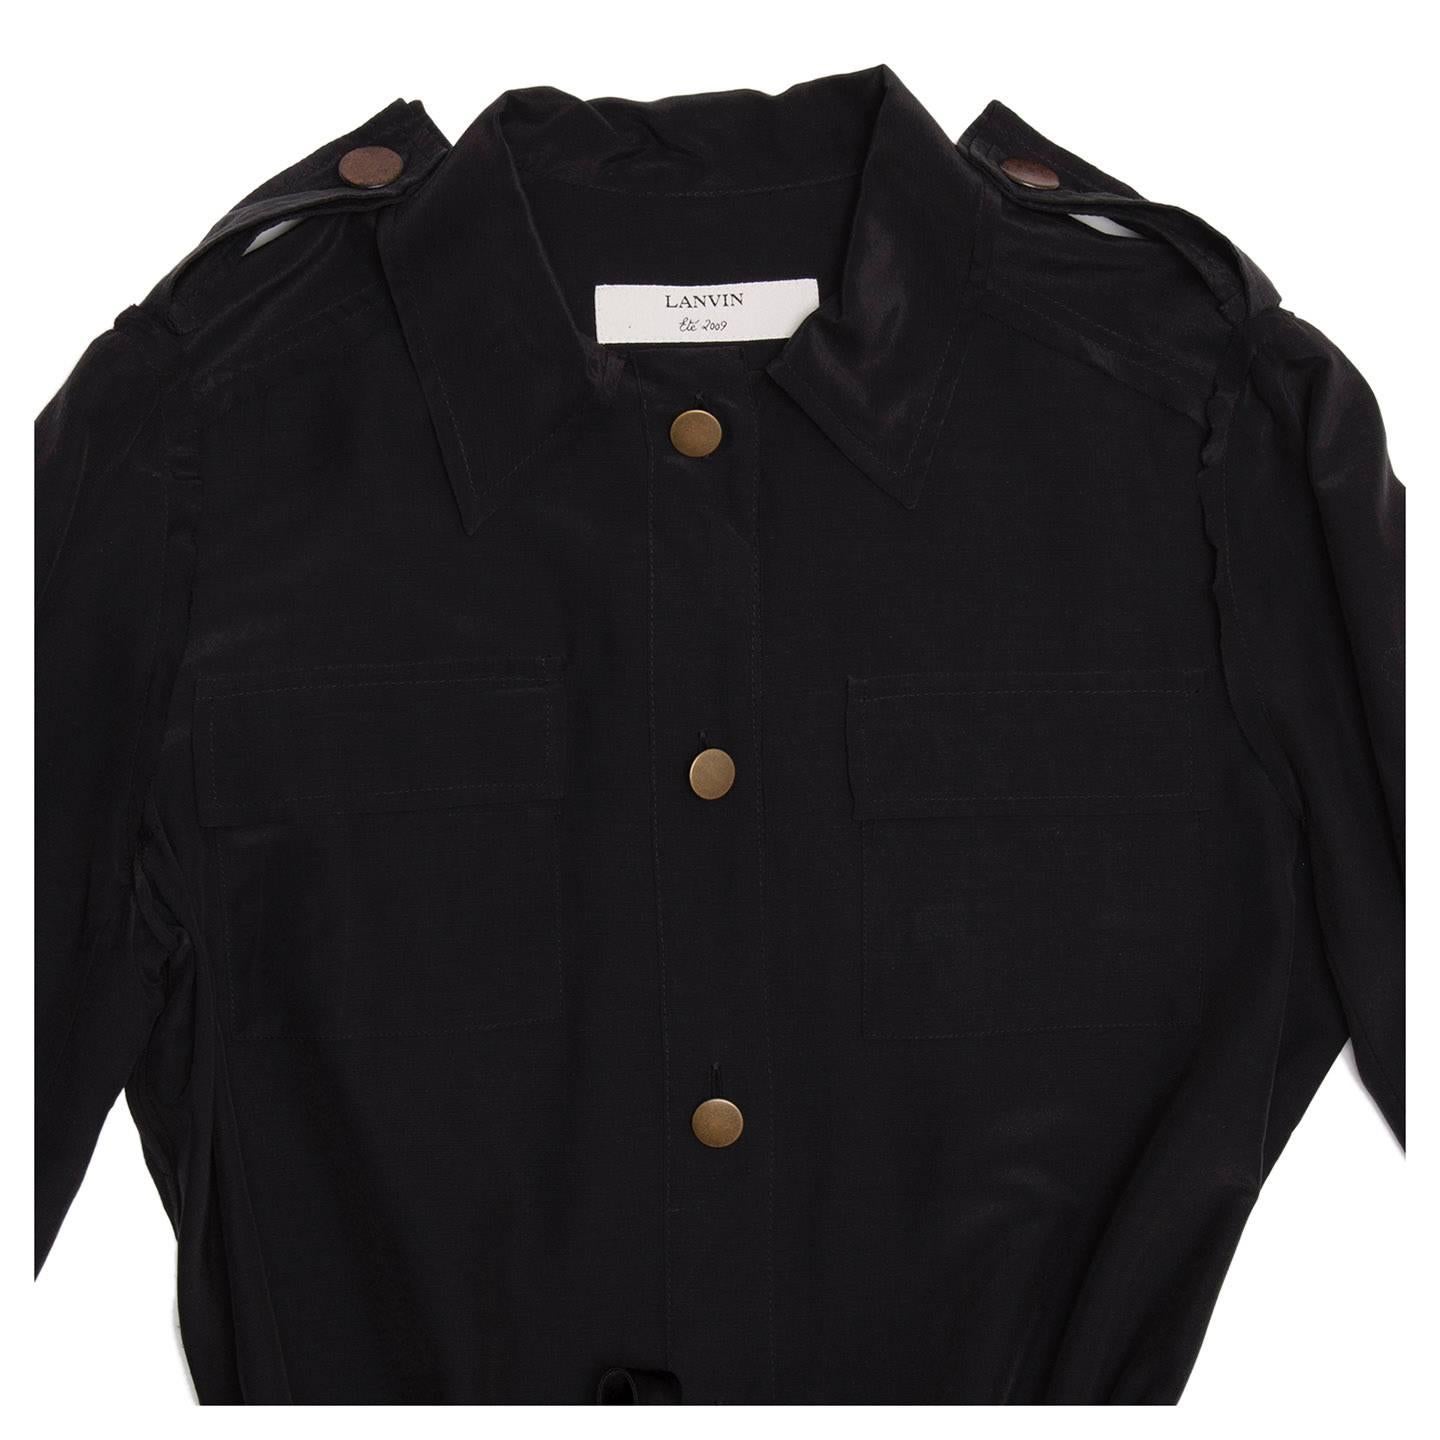 Lanvin Black Silk Shirt Dress 1